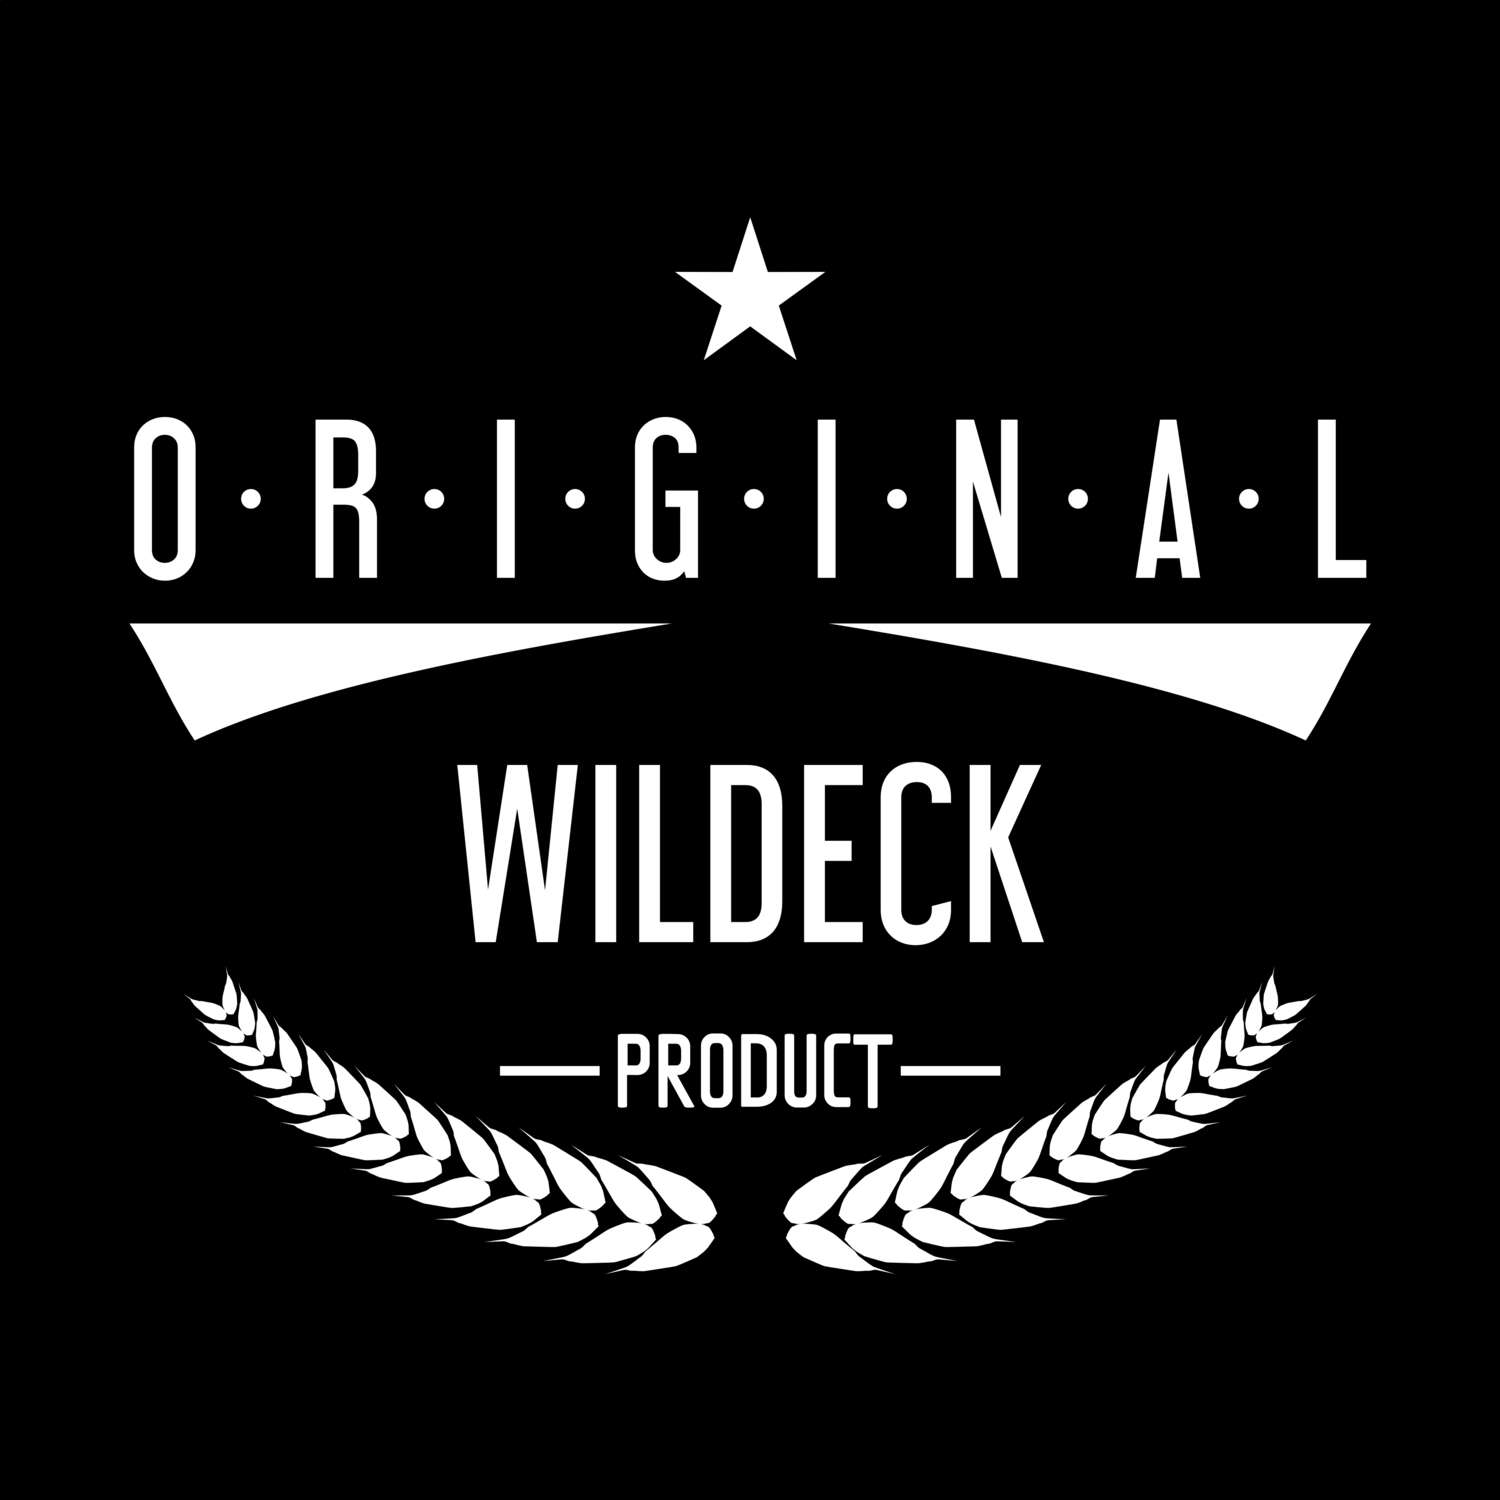 Wildeck T-Shirt »Original Product«